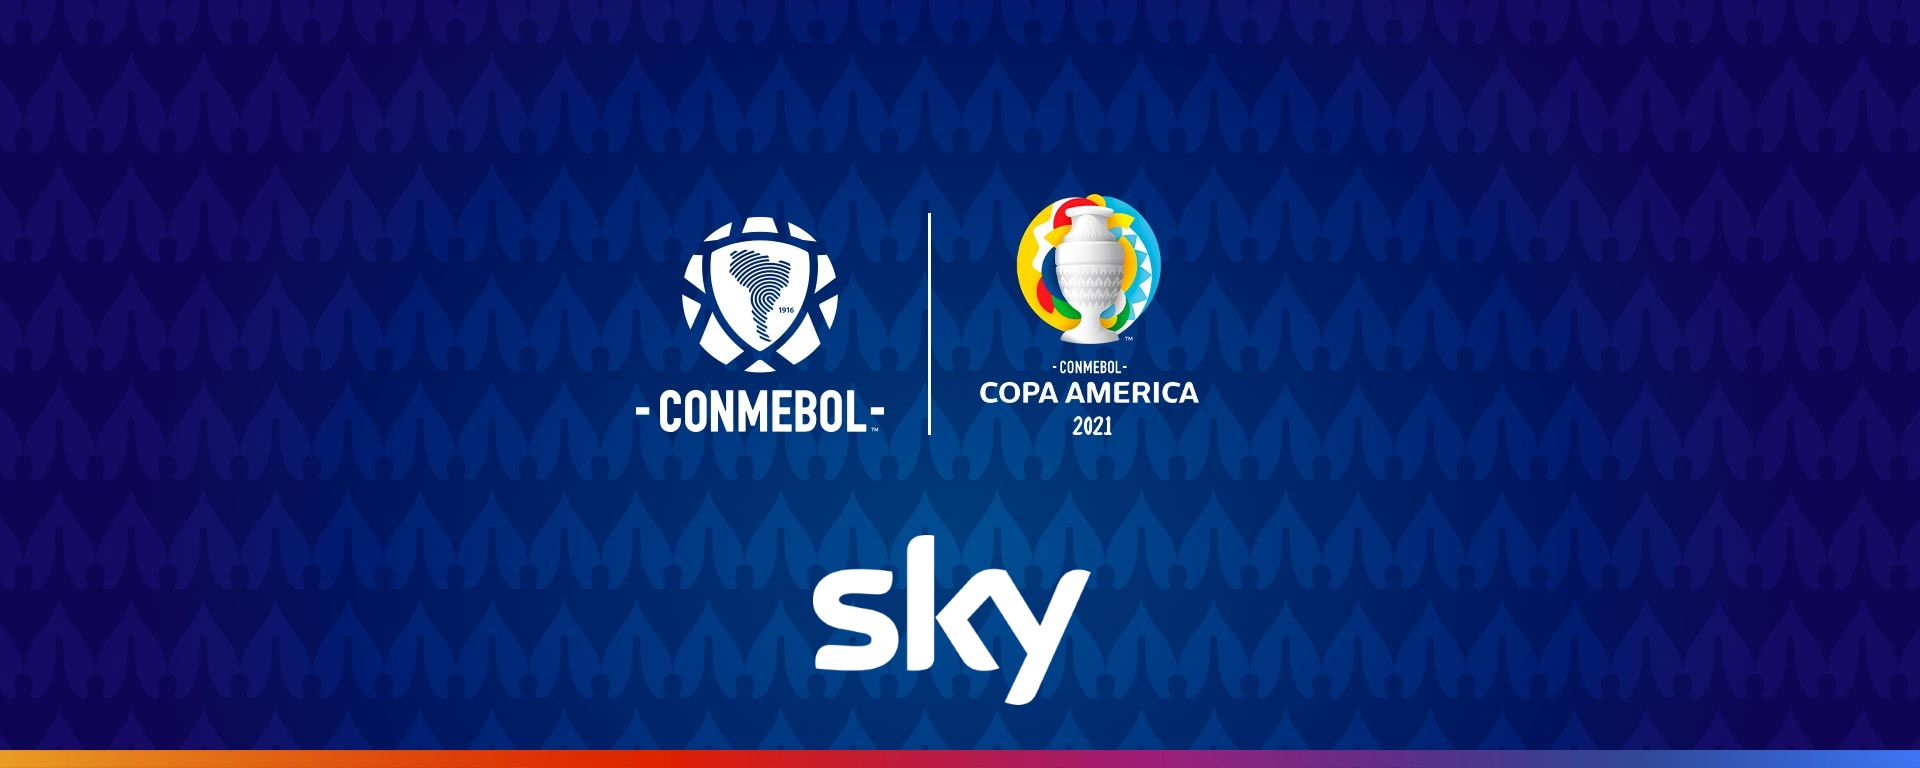 Copa America 2021 su Sky